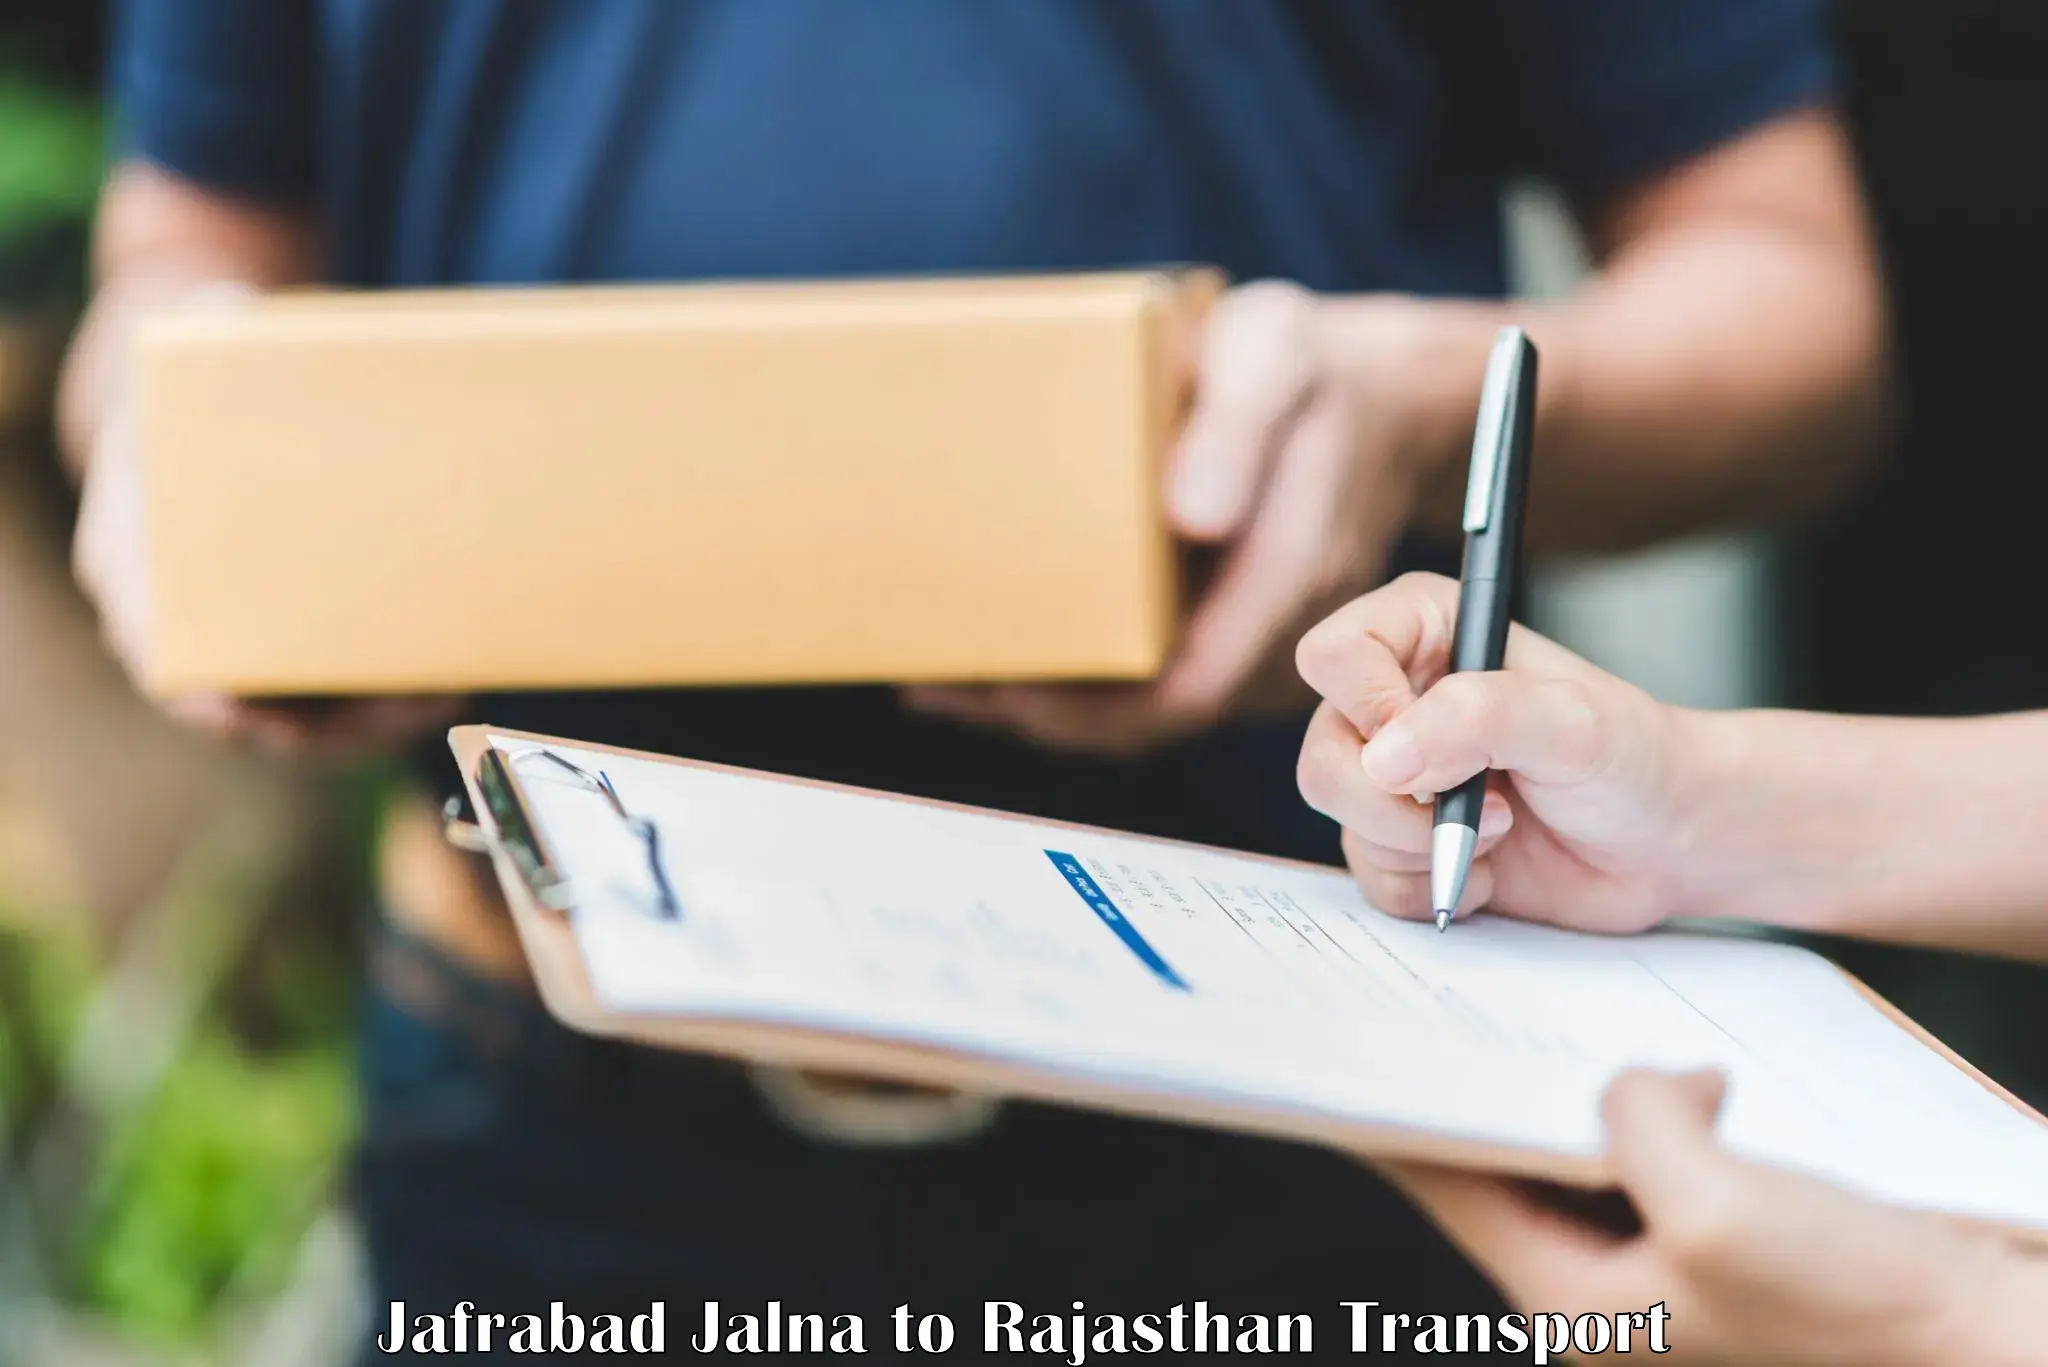 Truck transport companies in India Jafrabad Jalna to Nagar